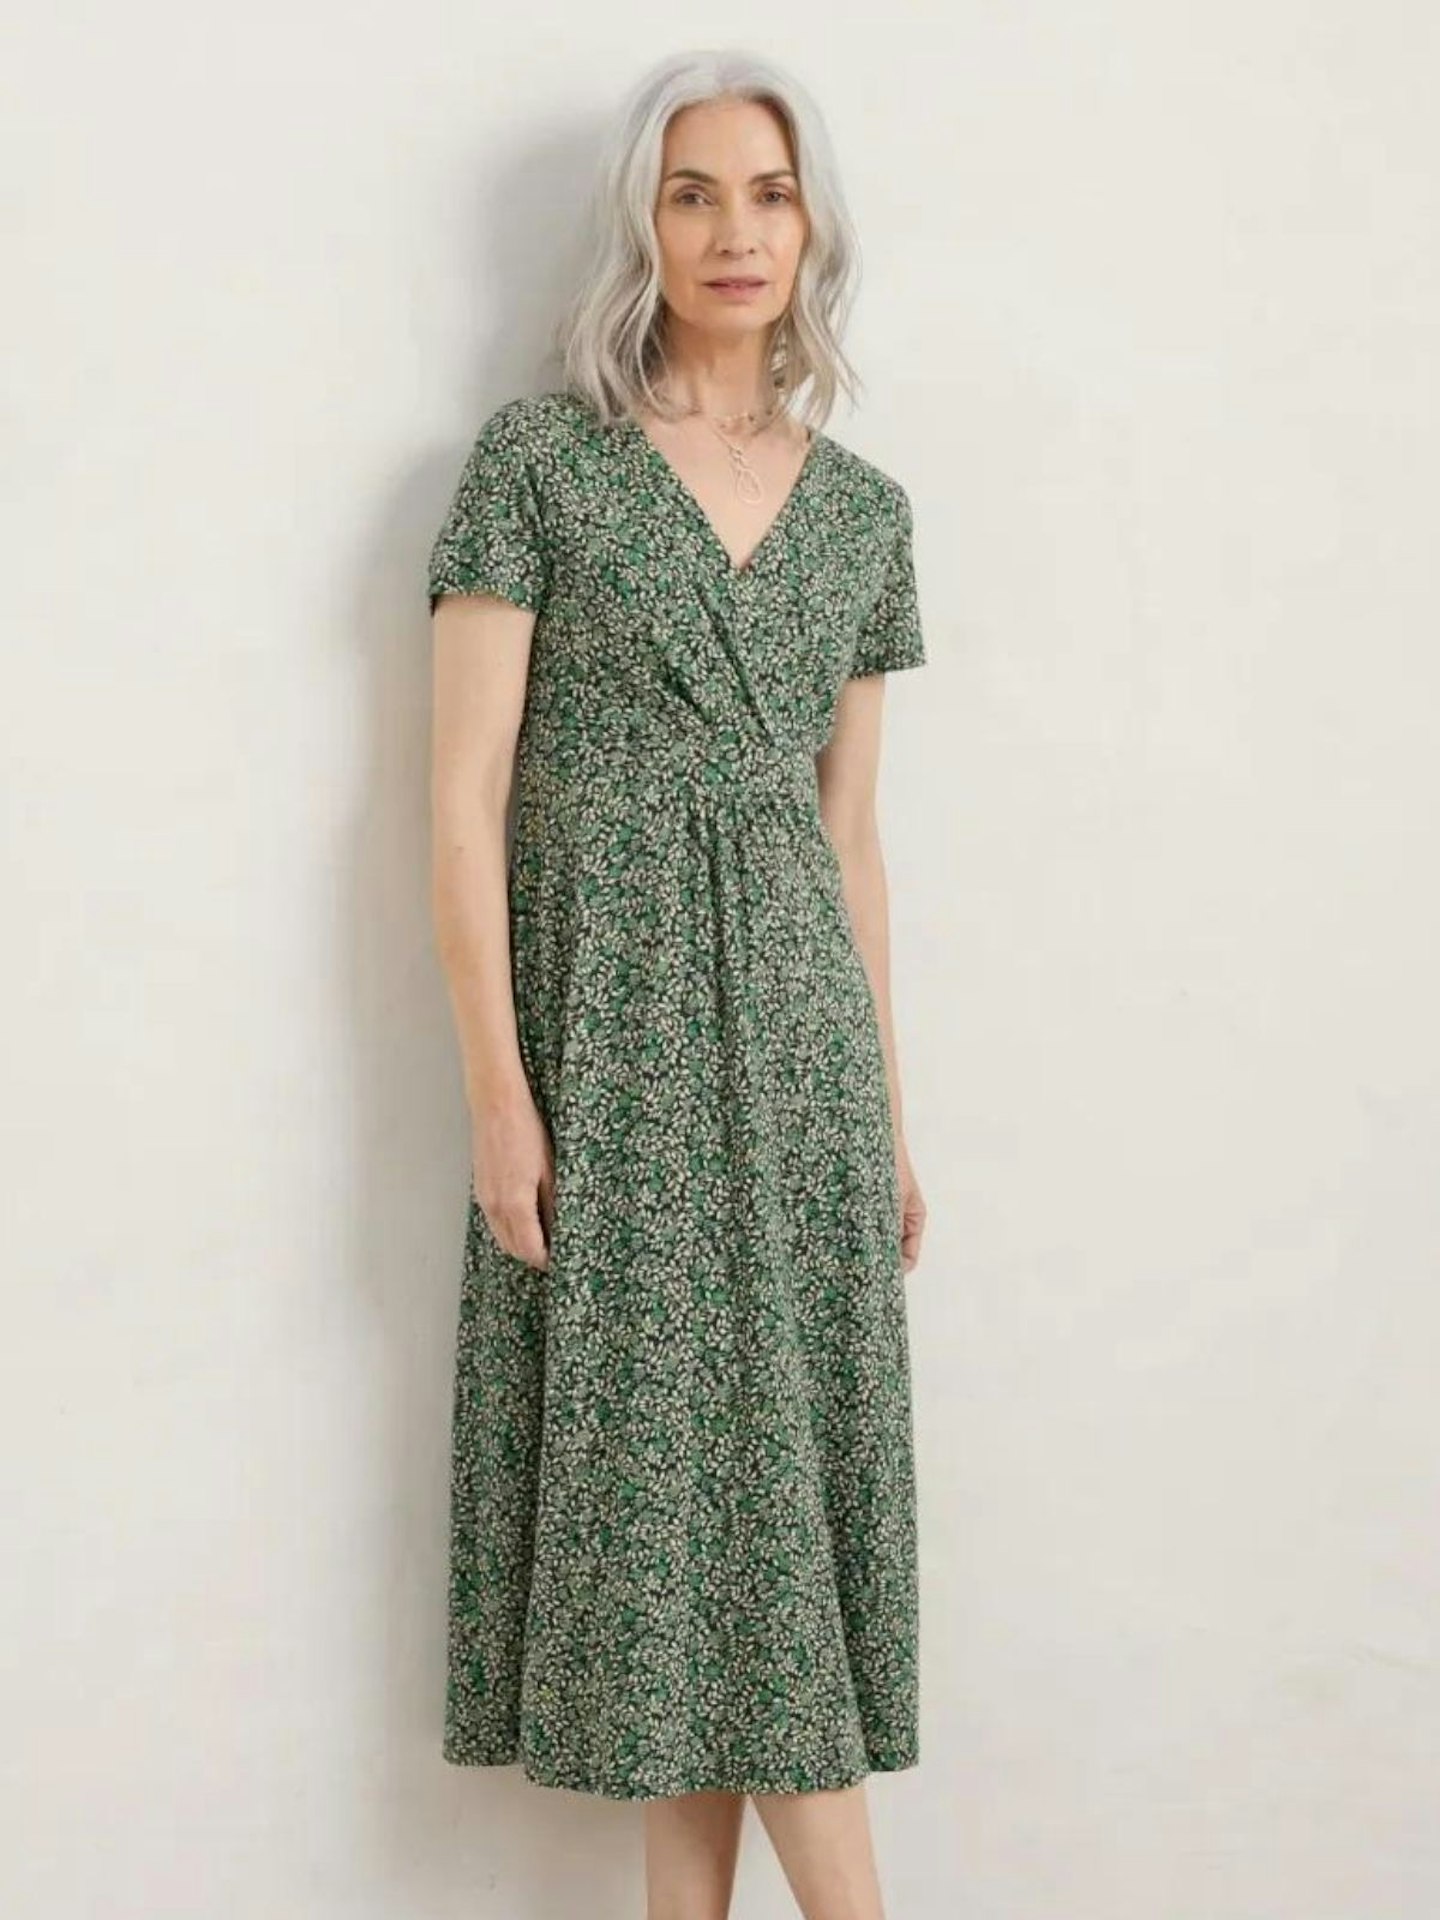 https://images.bauerhosting.com/affiliates/sites/9/2023/05/cotton-summer-dresses-over-50s-6.jpg?auto=format&w=1440&q=80